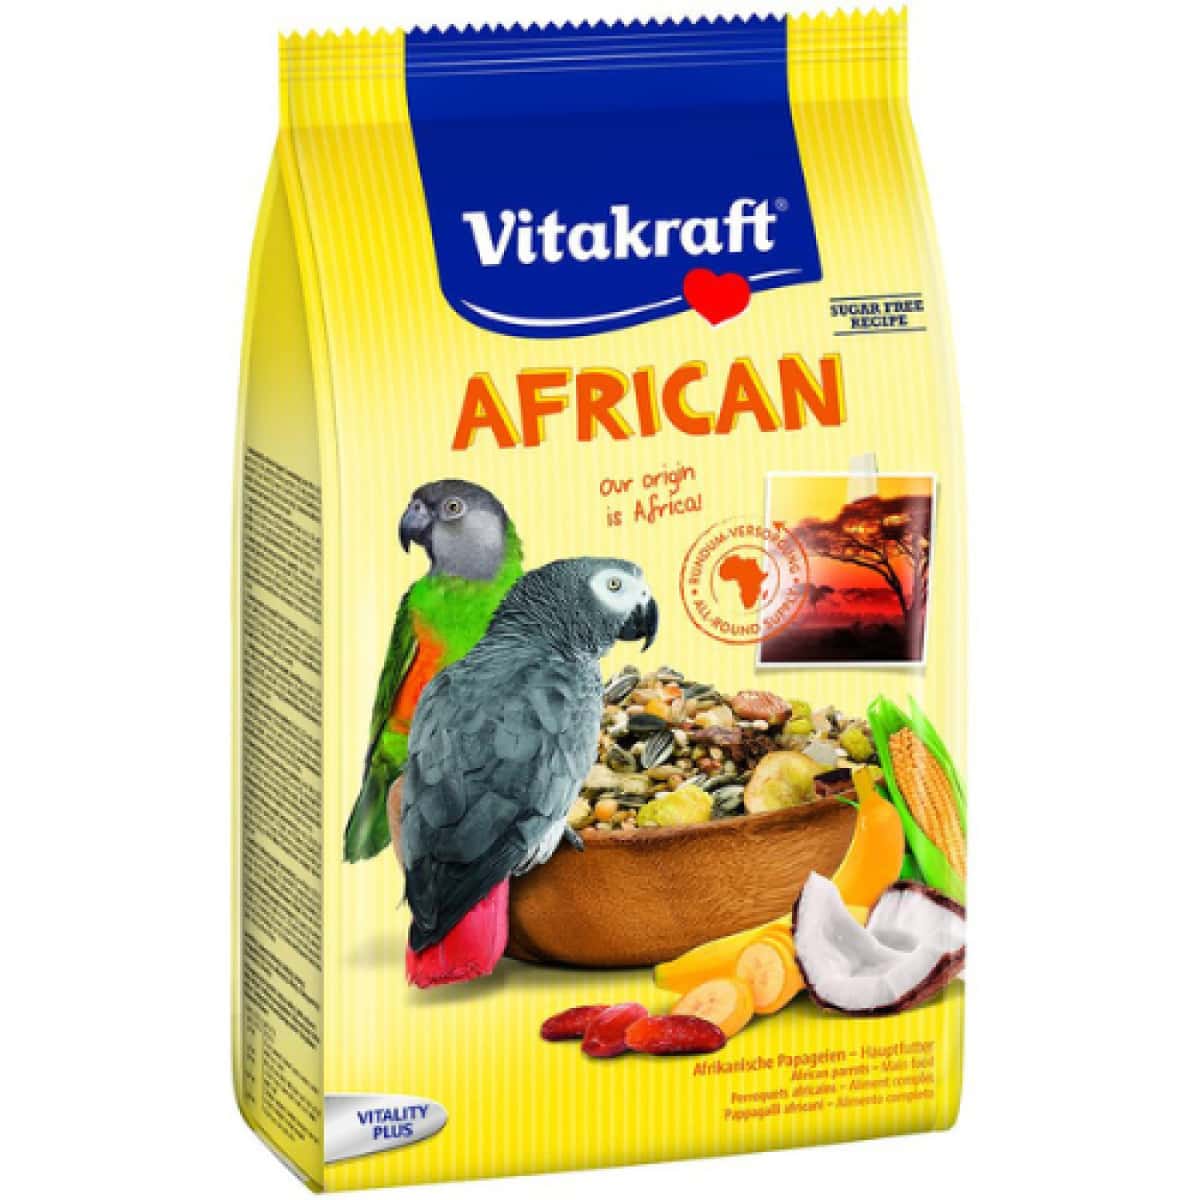 Vitakraft African - Large Parrot Food 750g Main Image